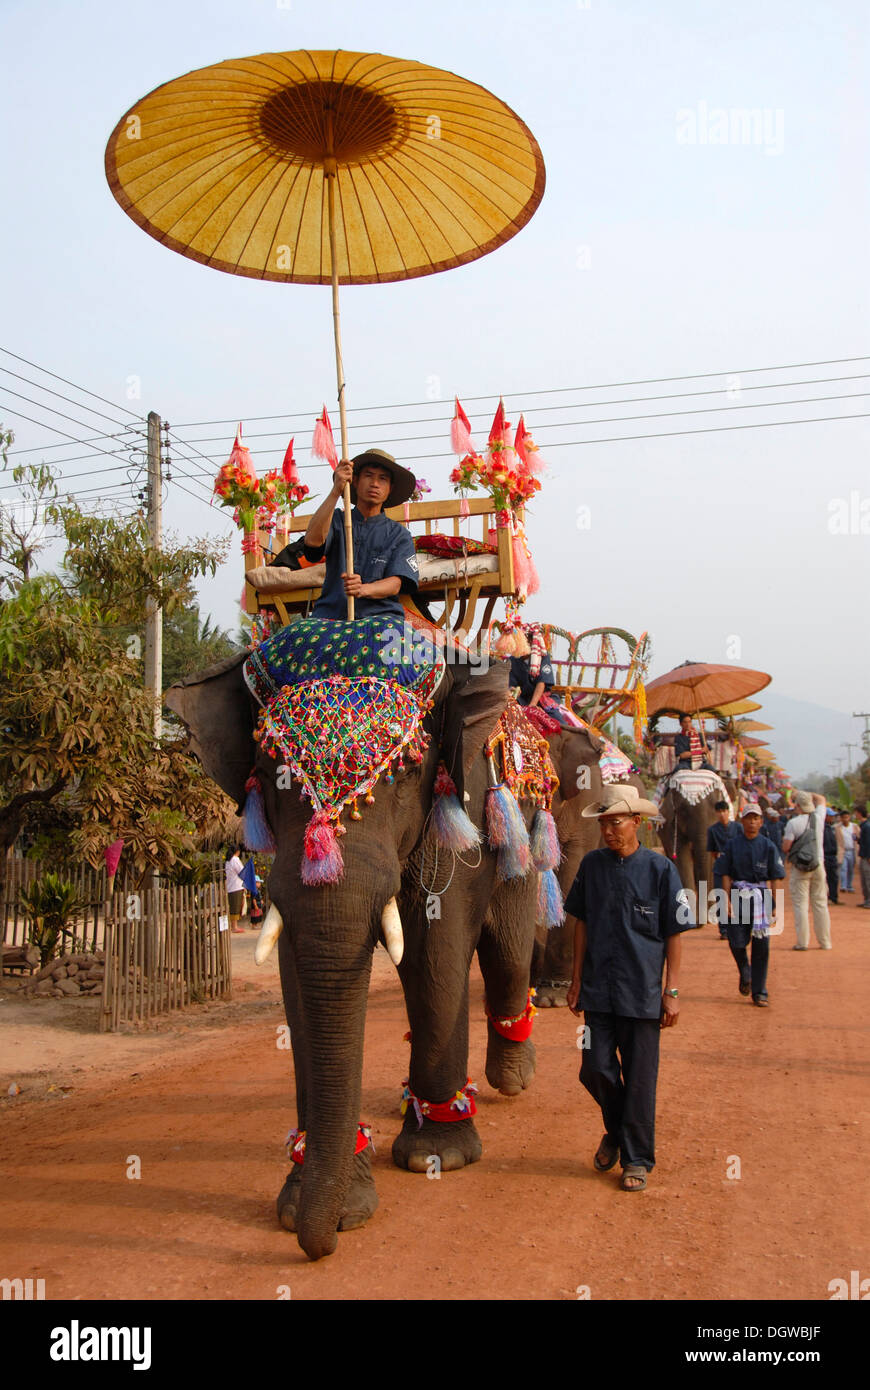 Decorated elephants, Mahout riding under sunshade, Elephant Festival Parade, Ban Viengkeo, Hongsa, Xaignabouri Province Stock Photo